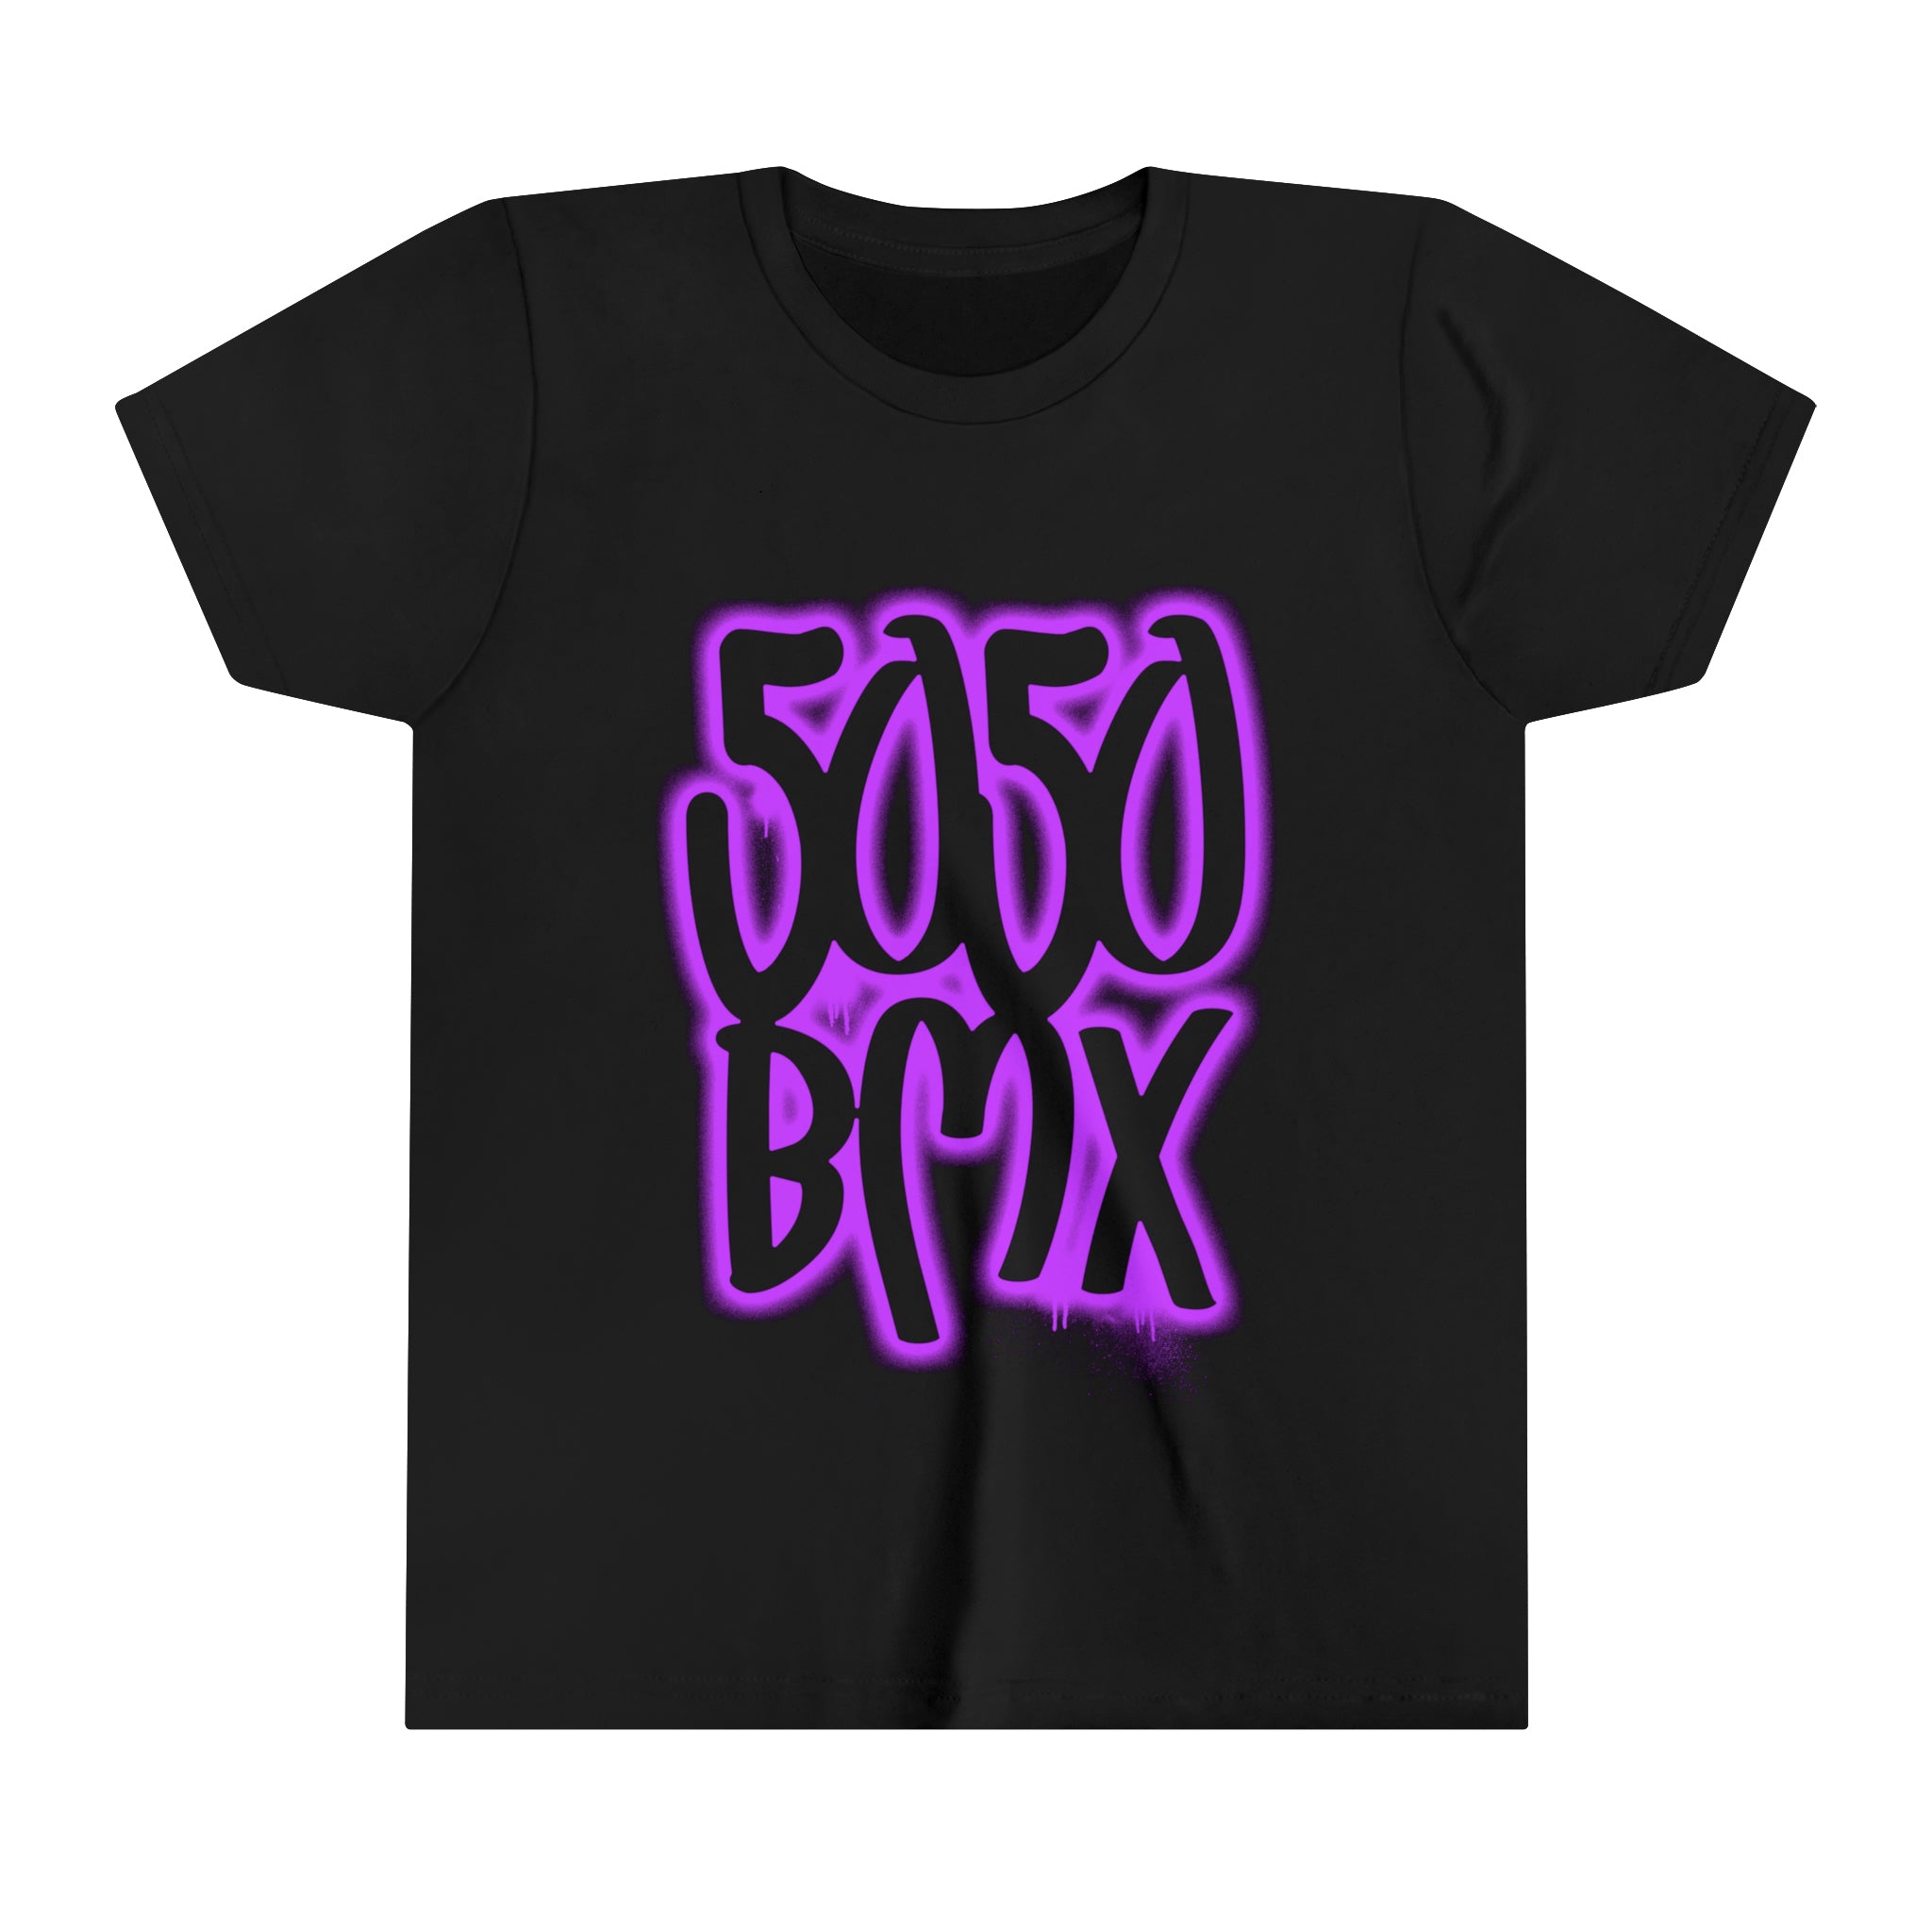 5050bmx Graffiti (Purple) - Youth Short Sleeve Tee